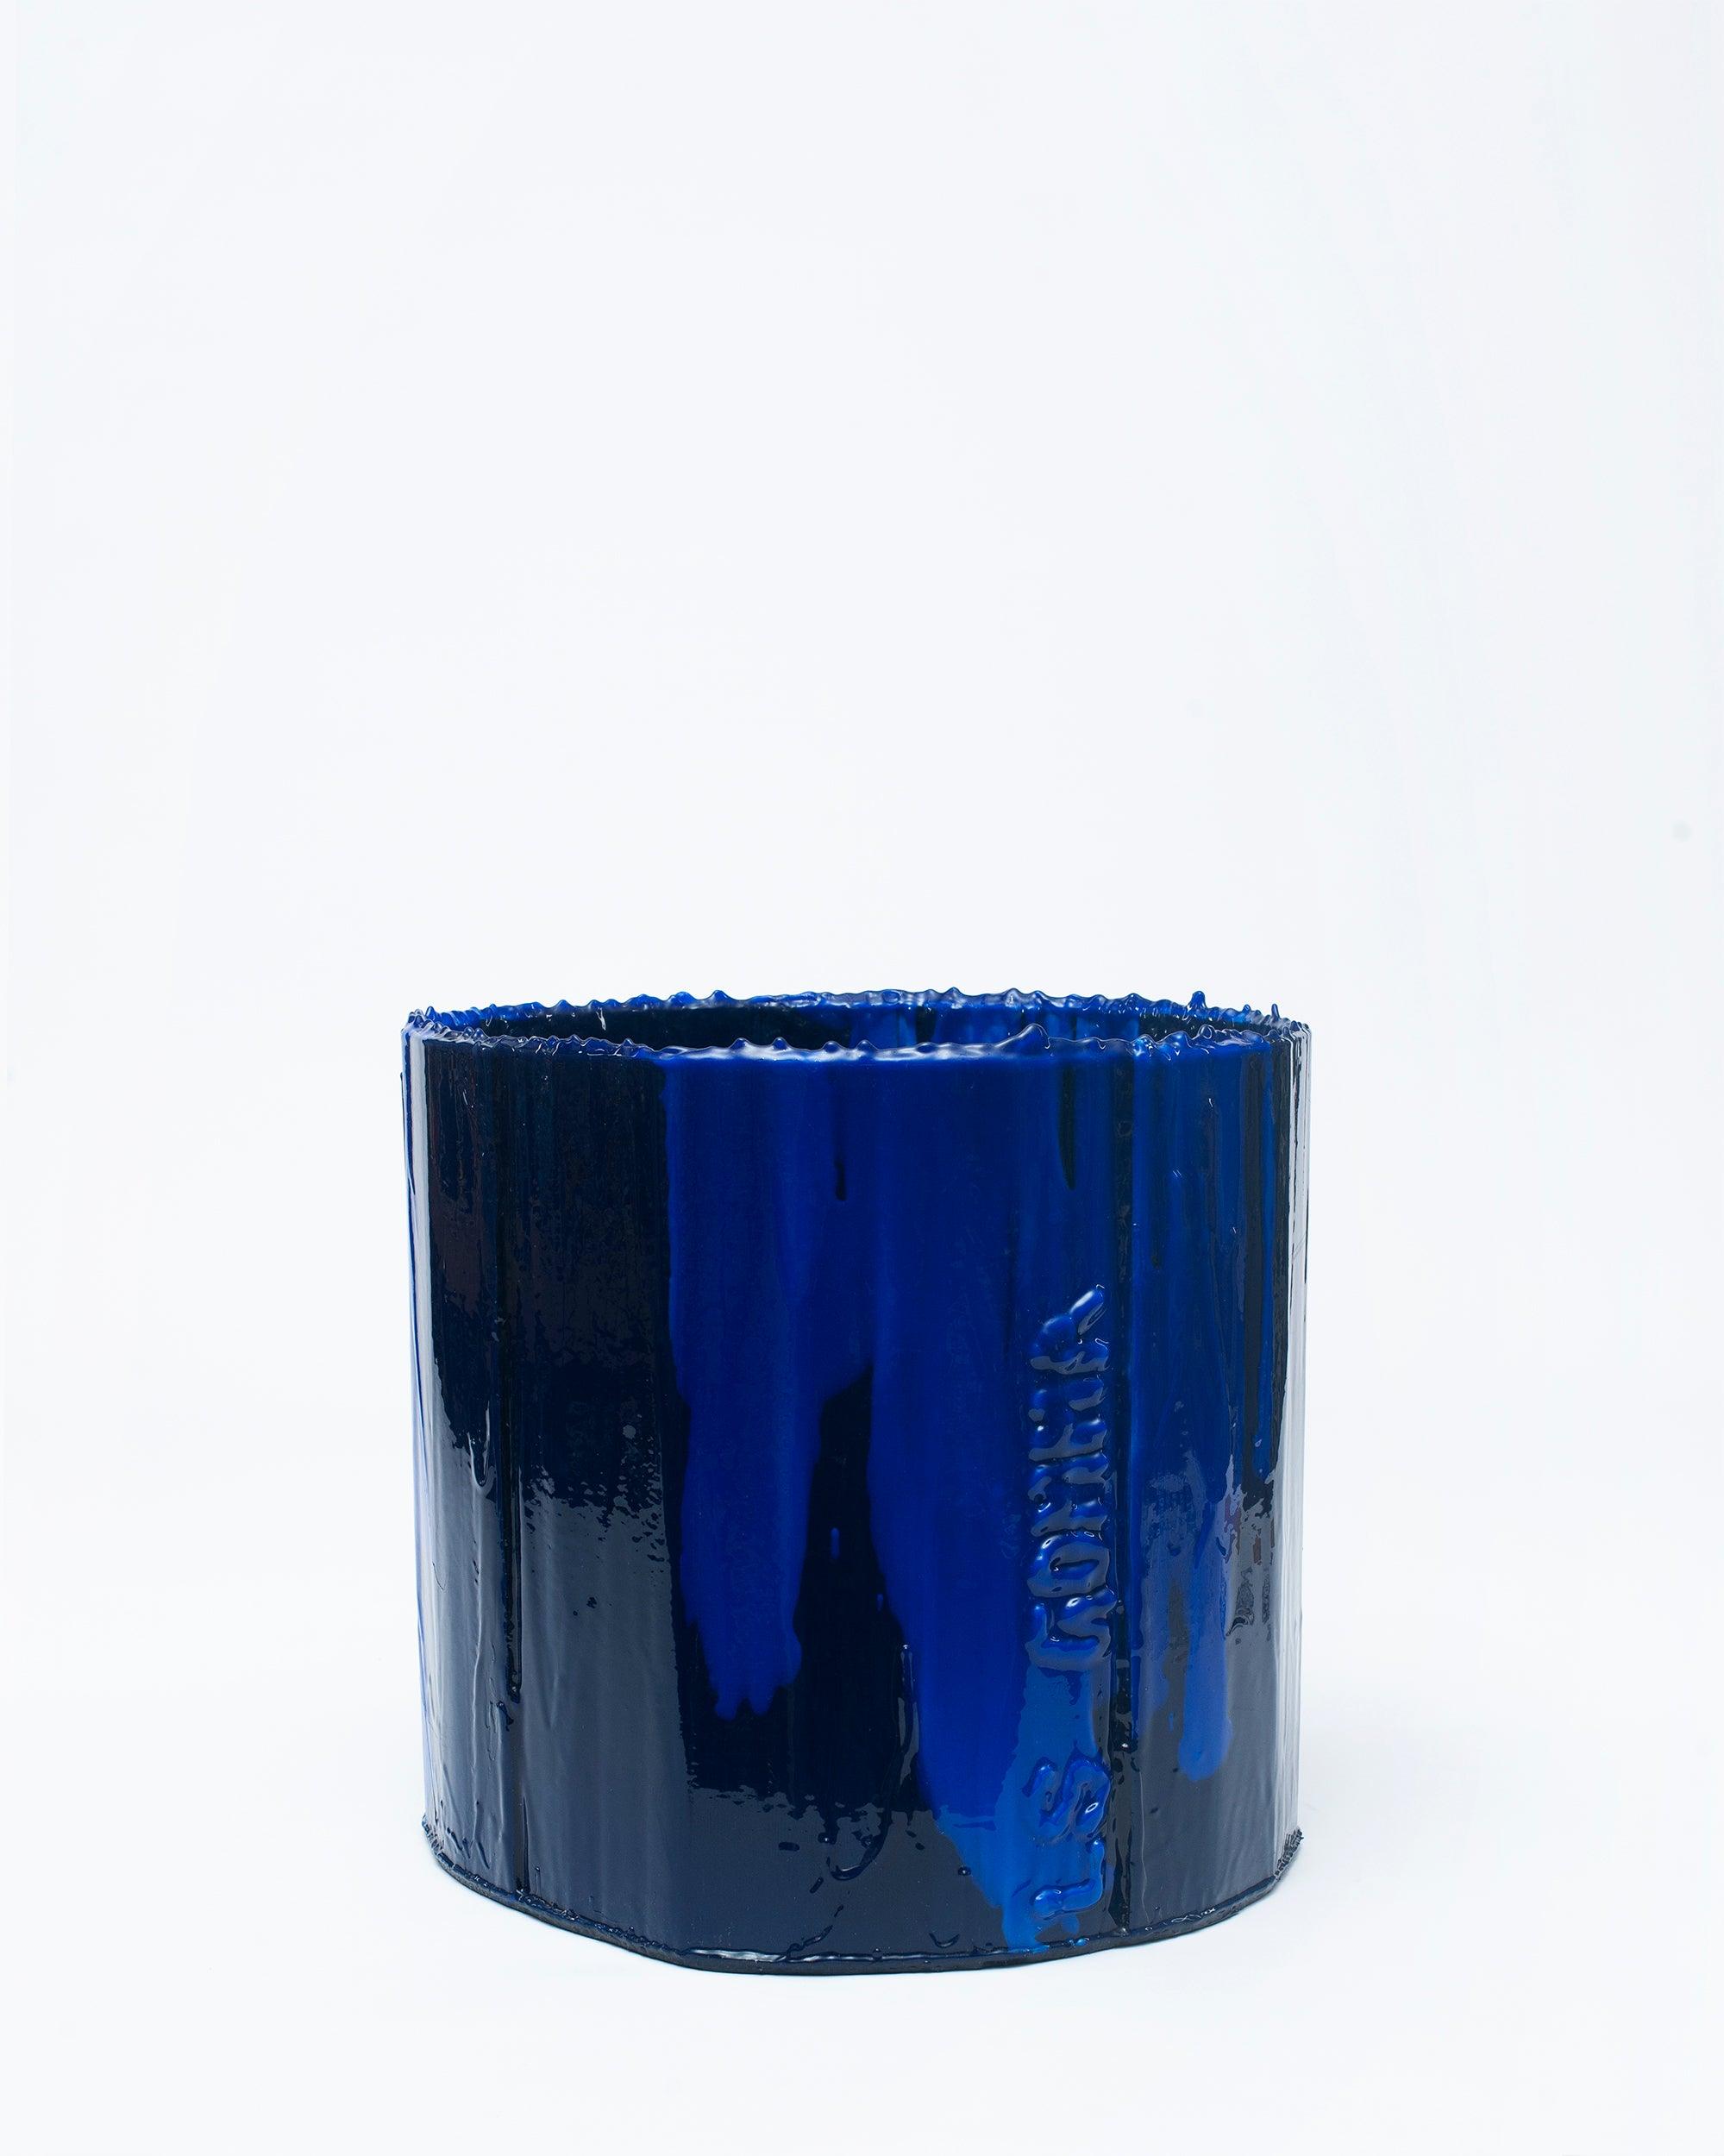 White background, NIKO JUNE logo on the right side in handmade organizer object Deep Flex blue